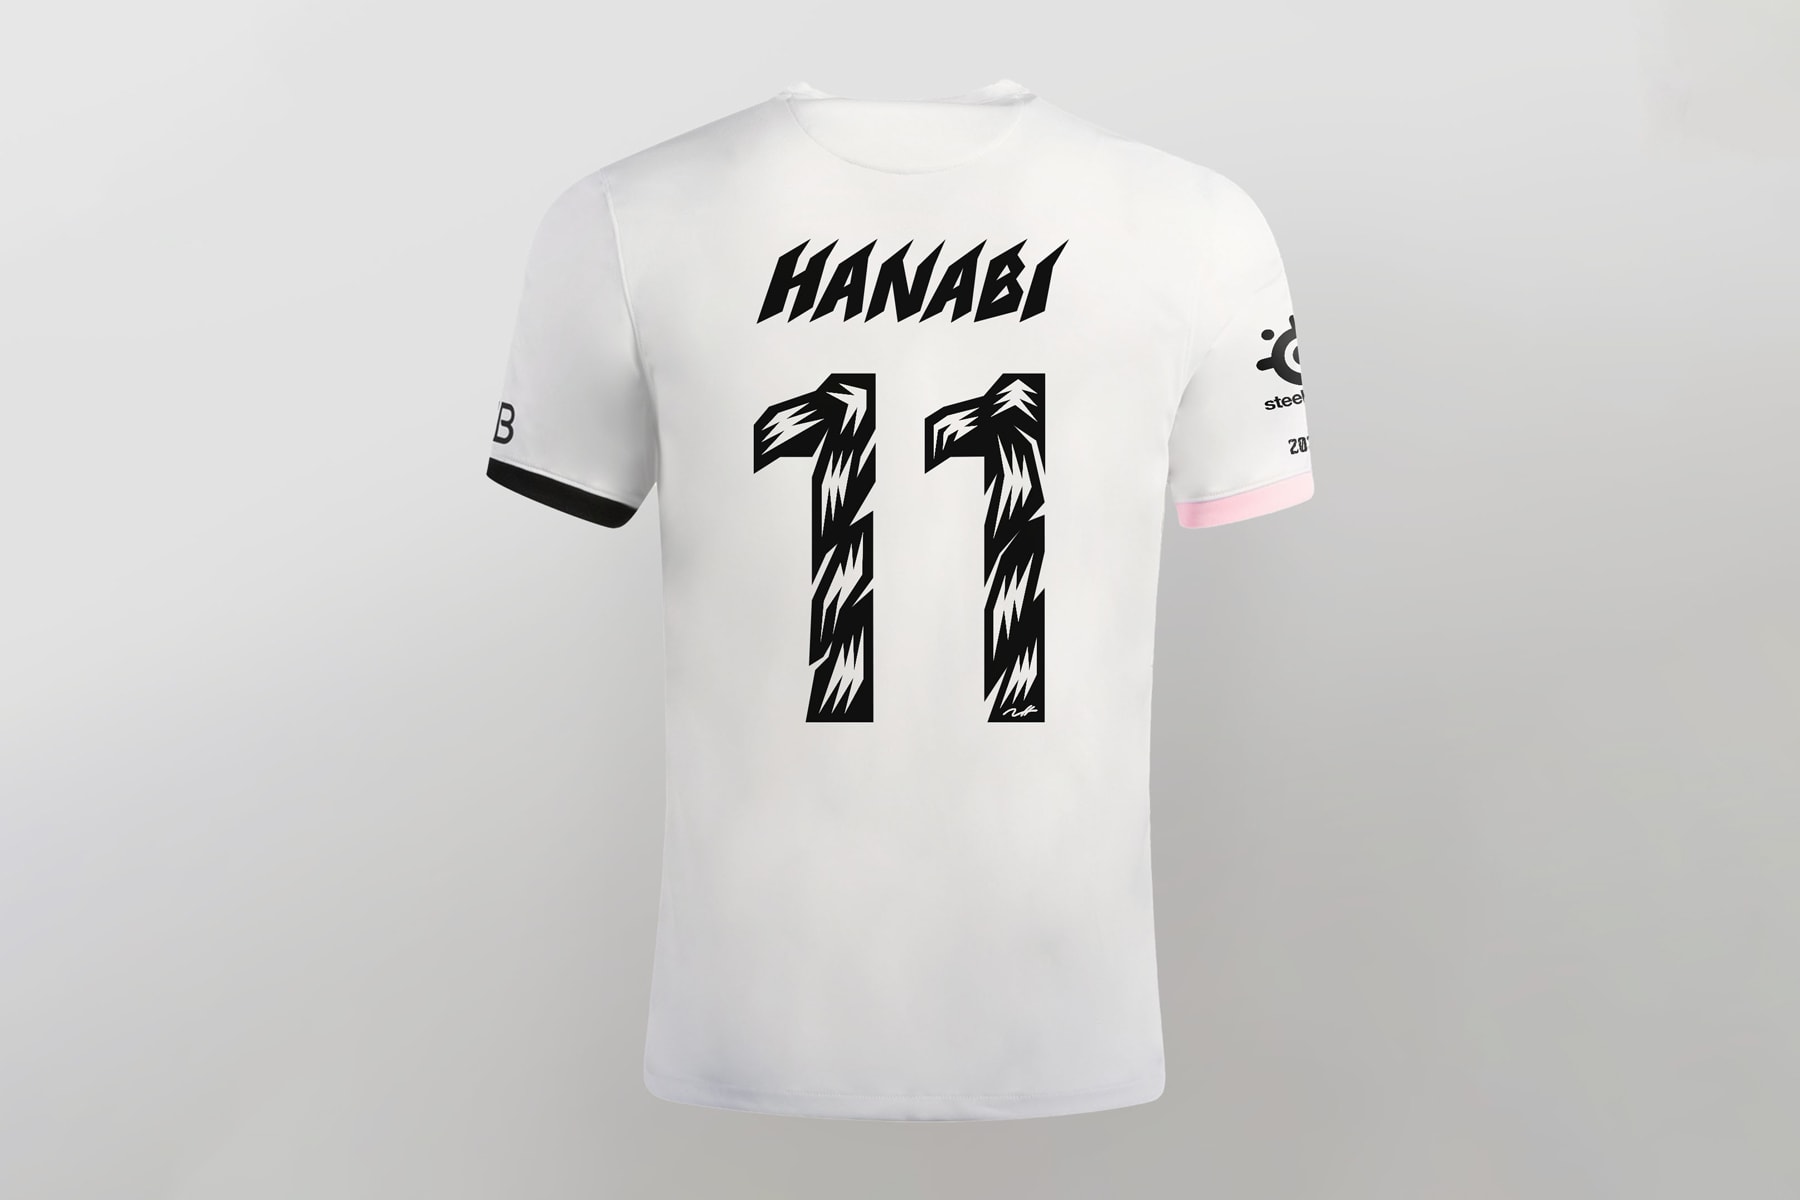 PSG Talon MSI Tommii Lim 2022 Kit info Su "Hanabi" Chia-Hsian Nike steelseries twitch League of Legends Tommii Lim